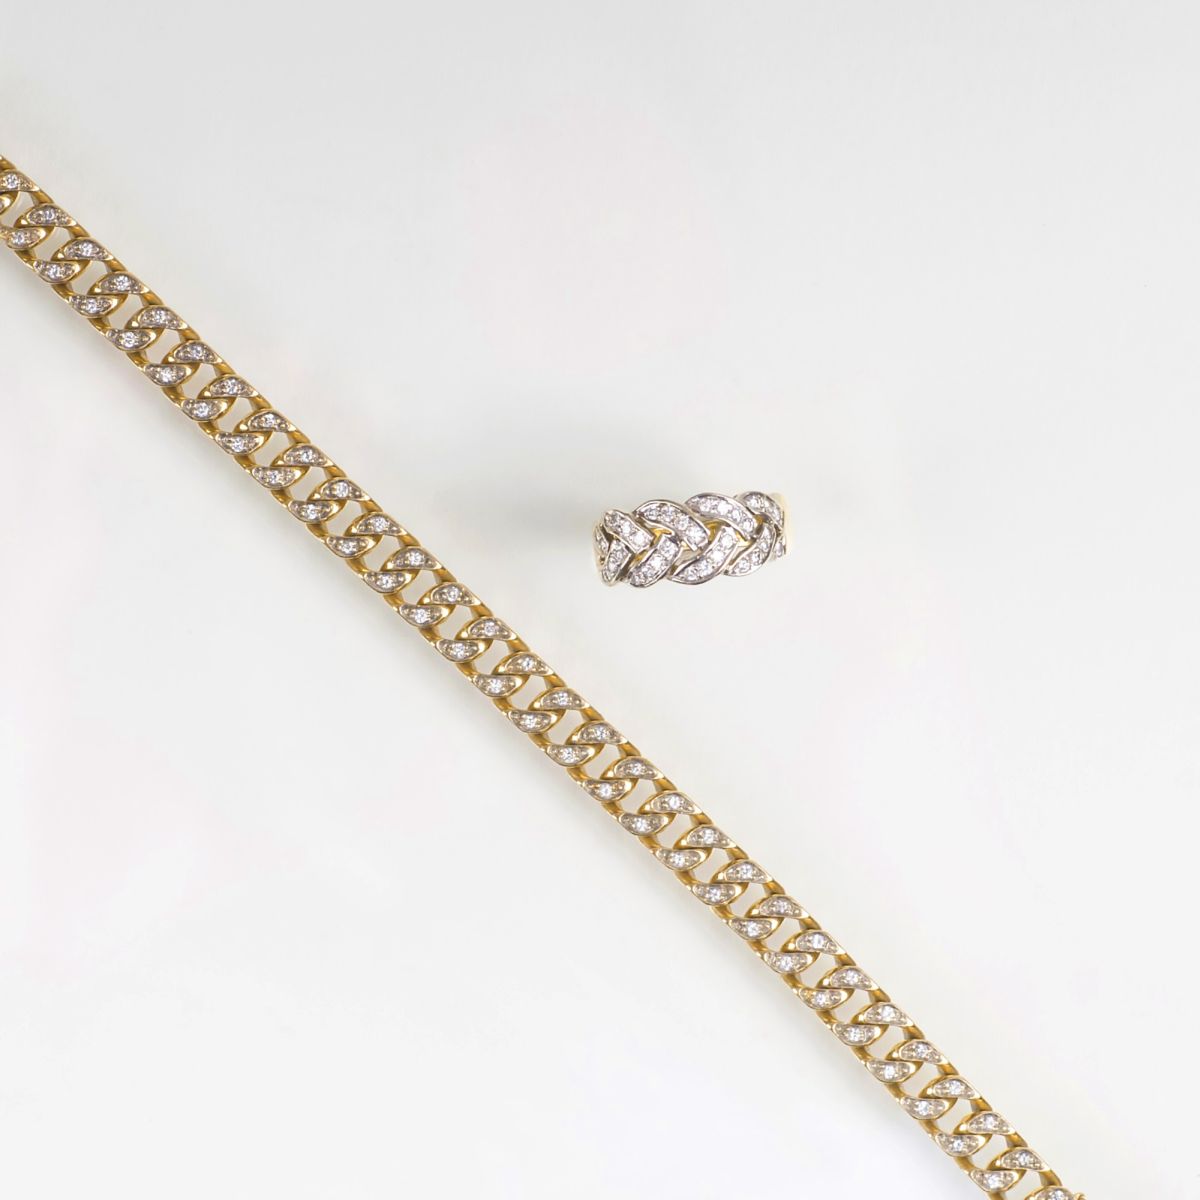 A Gold Diamond Bracelet and a Diamond Ring